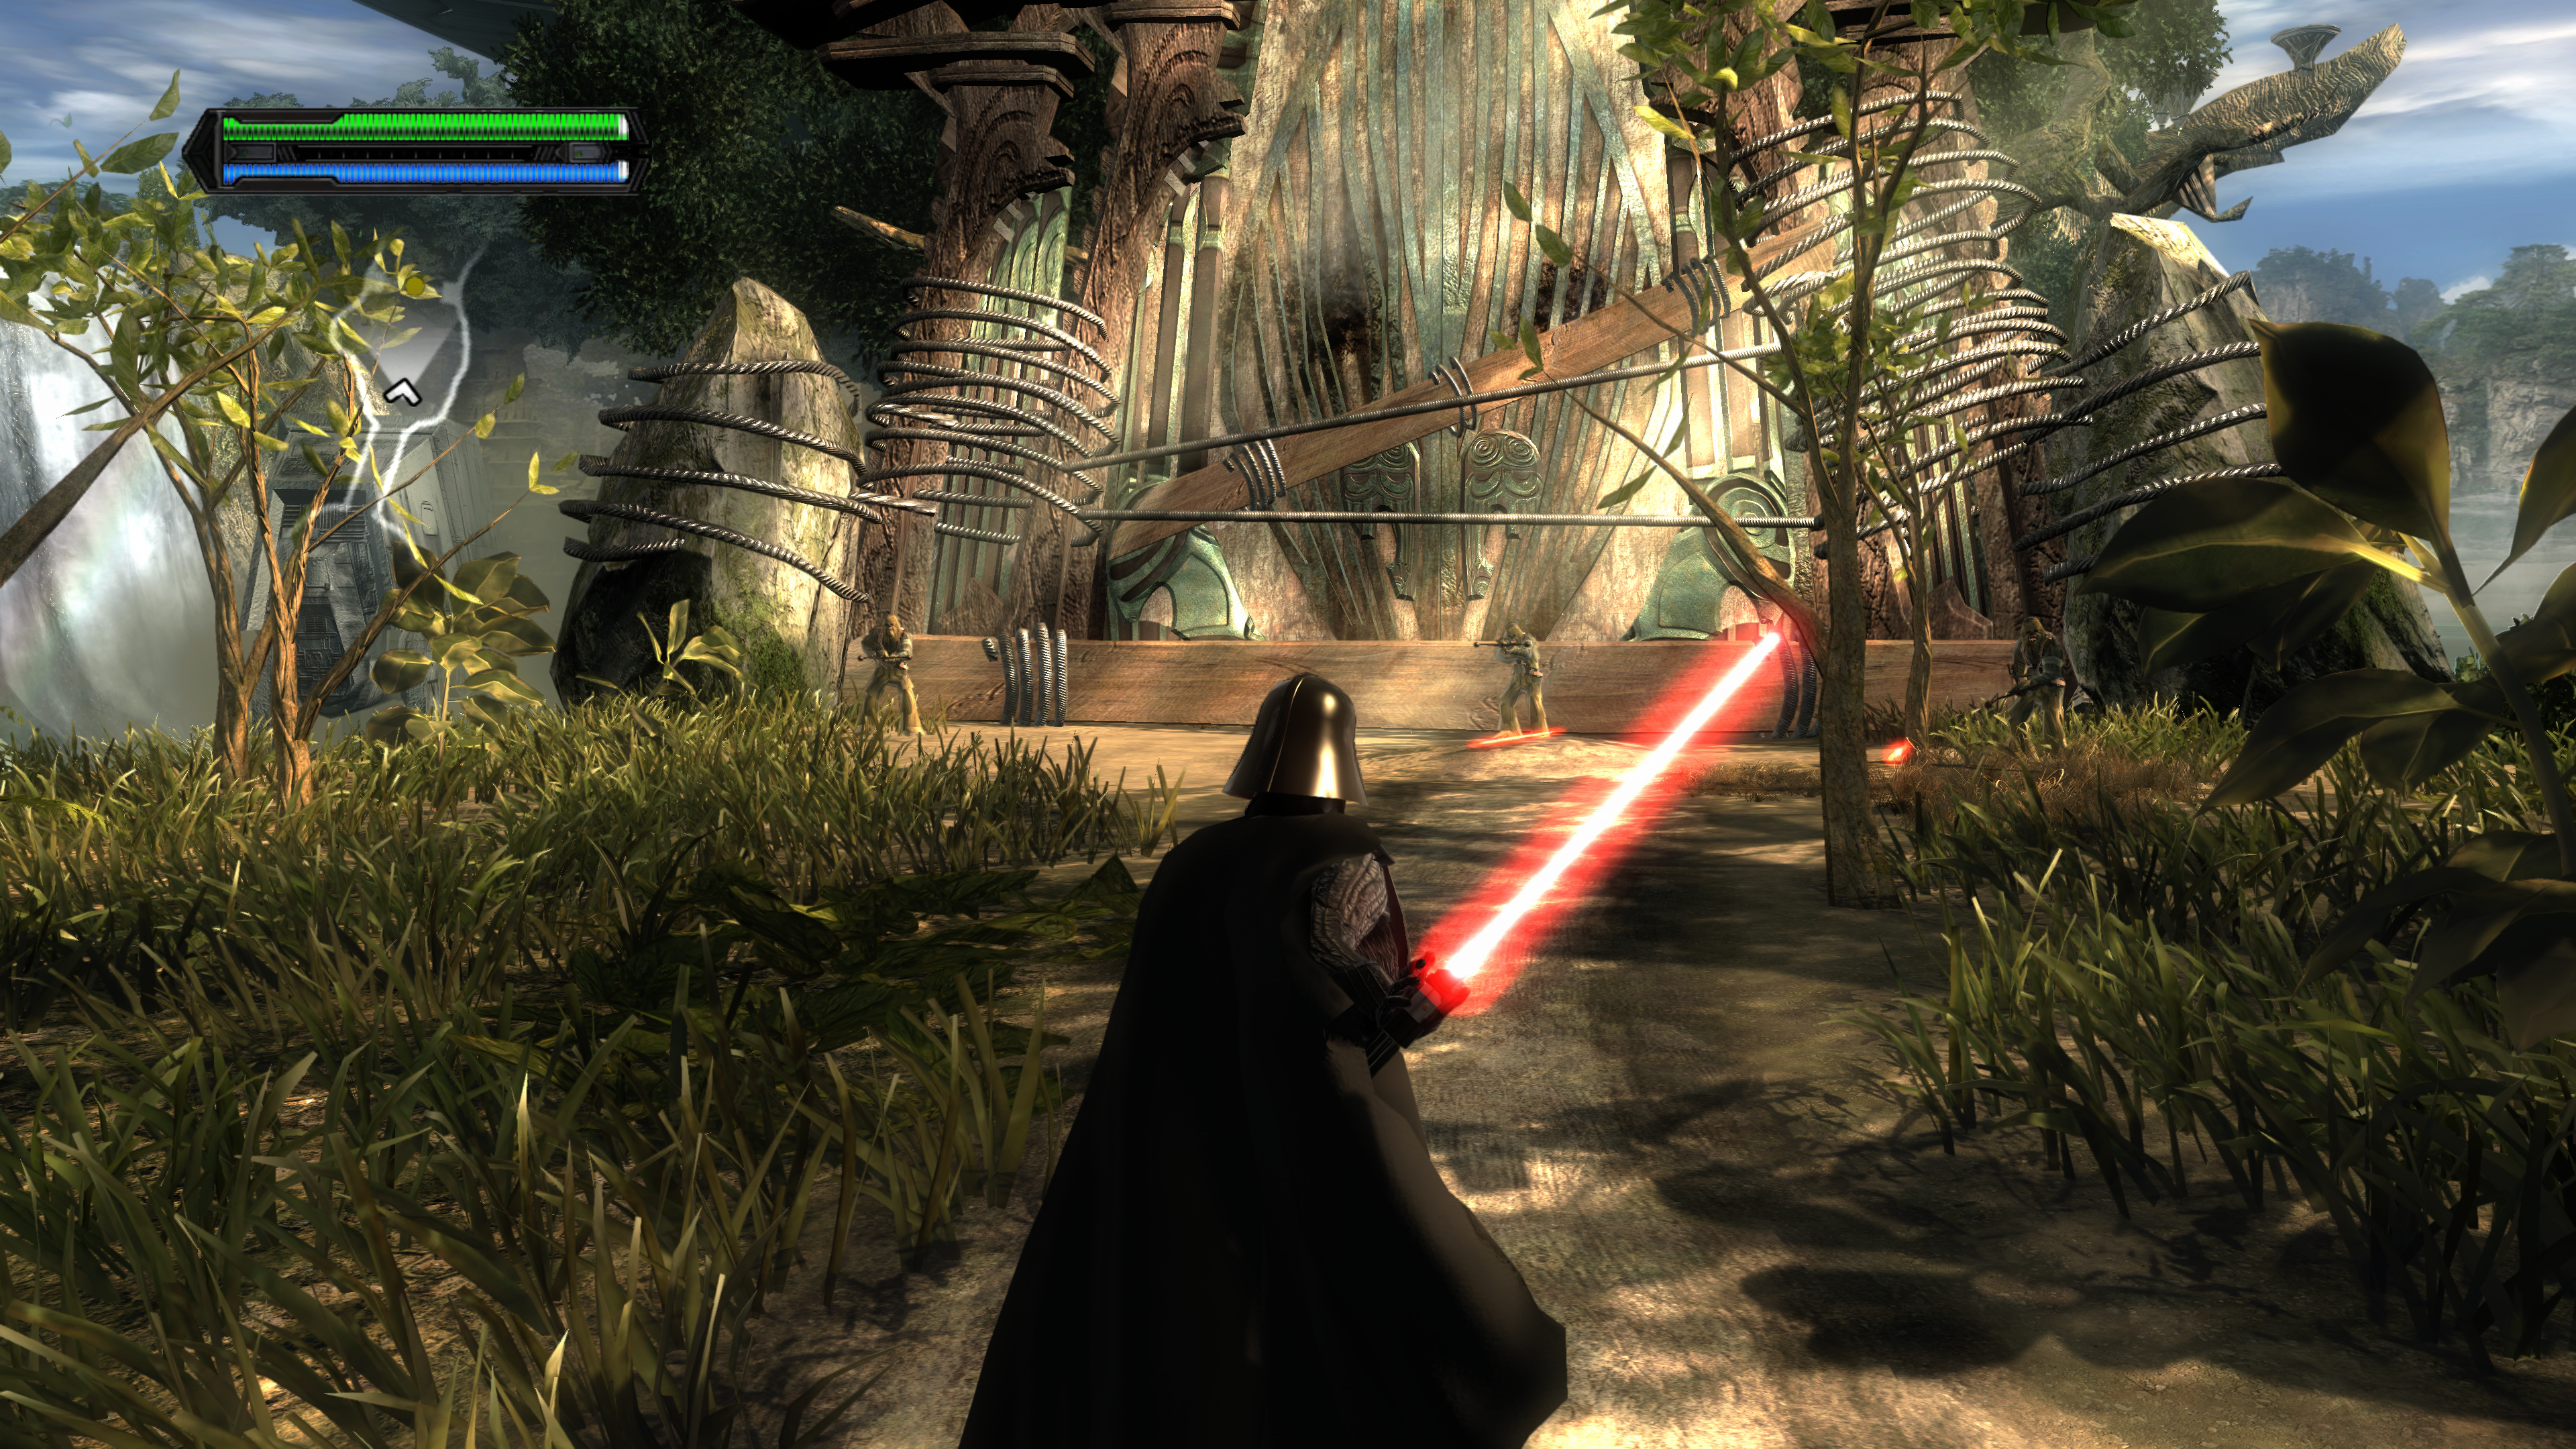 169 177. Звёздные войны the Force unleashed. Jedi Star Wars the Force unleashed Xbox 360. Star Wars: the Force unleashed Xbox. Star Wars: the Force unleashed II.